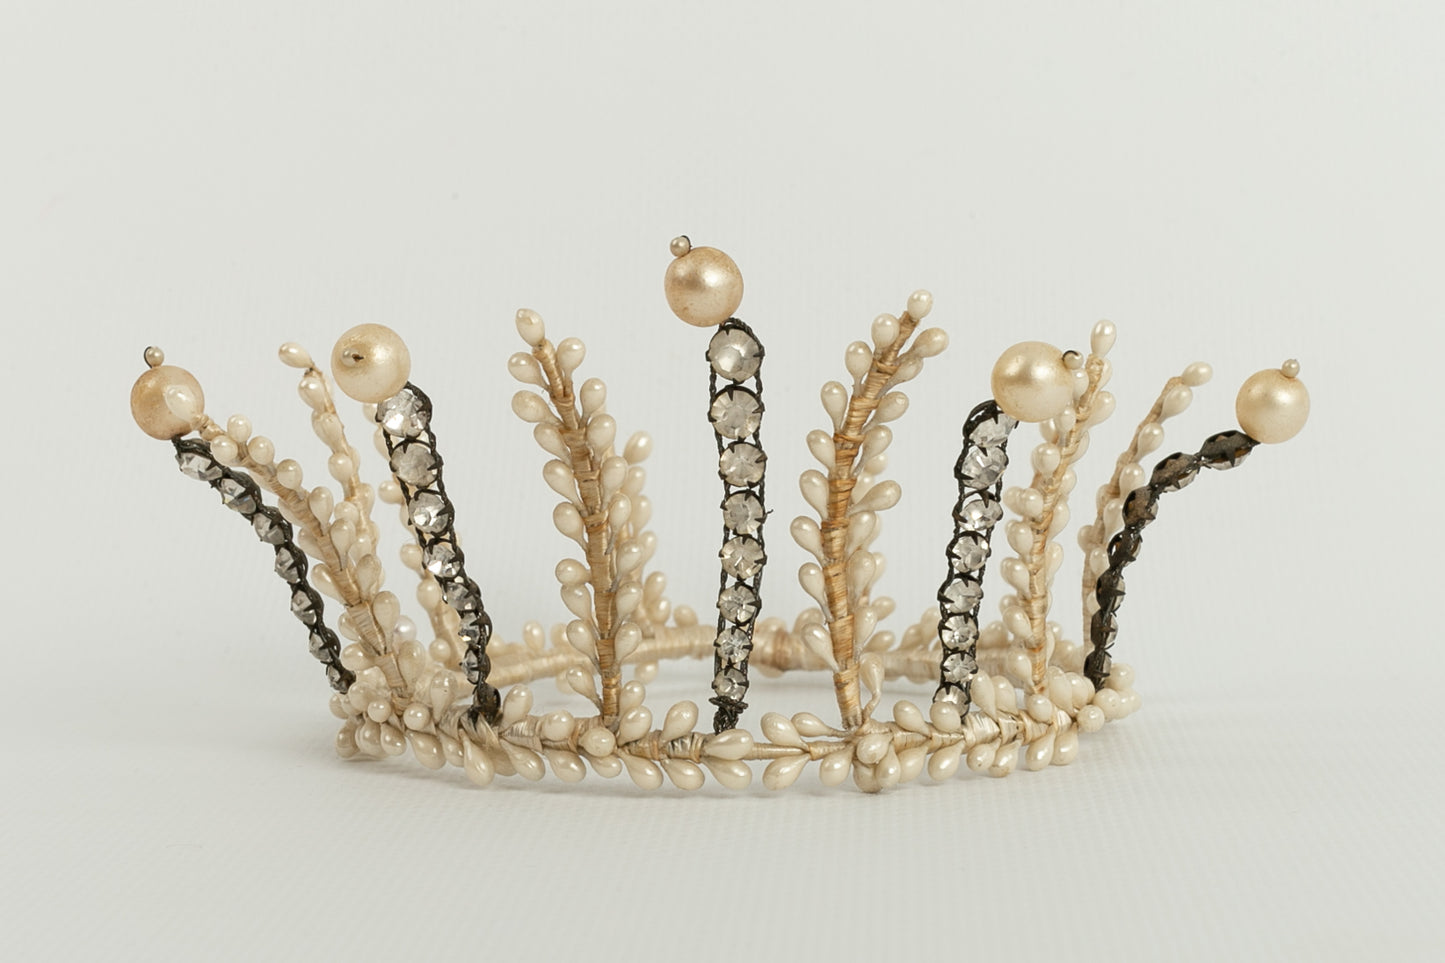 Antique ,bead crown, 1910s